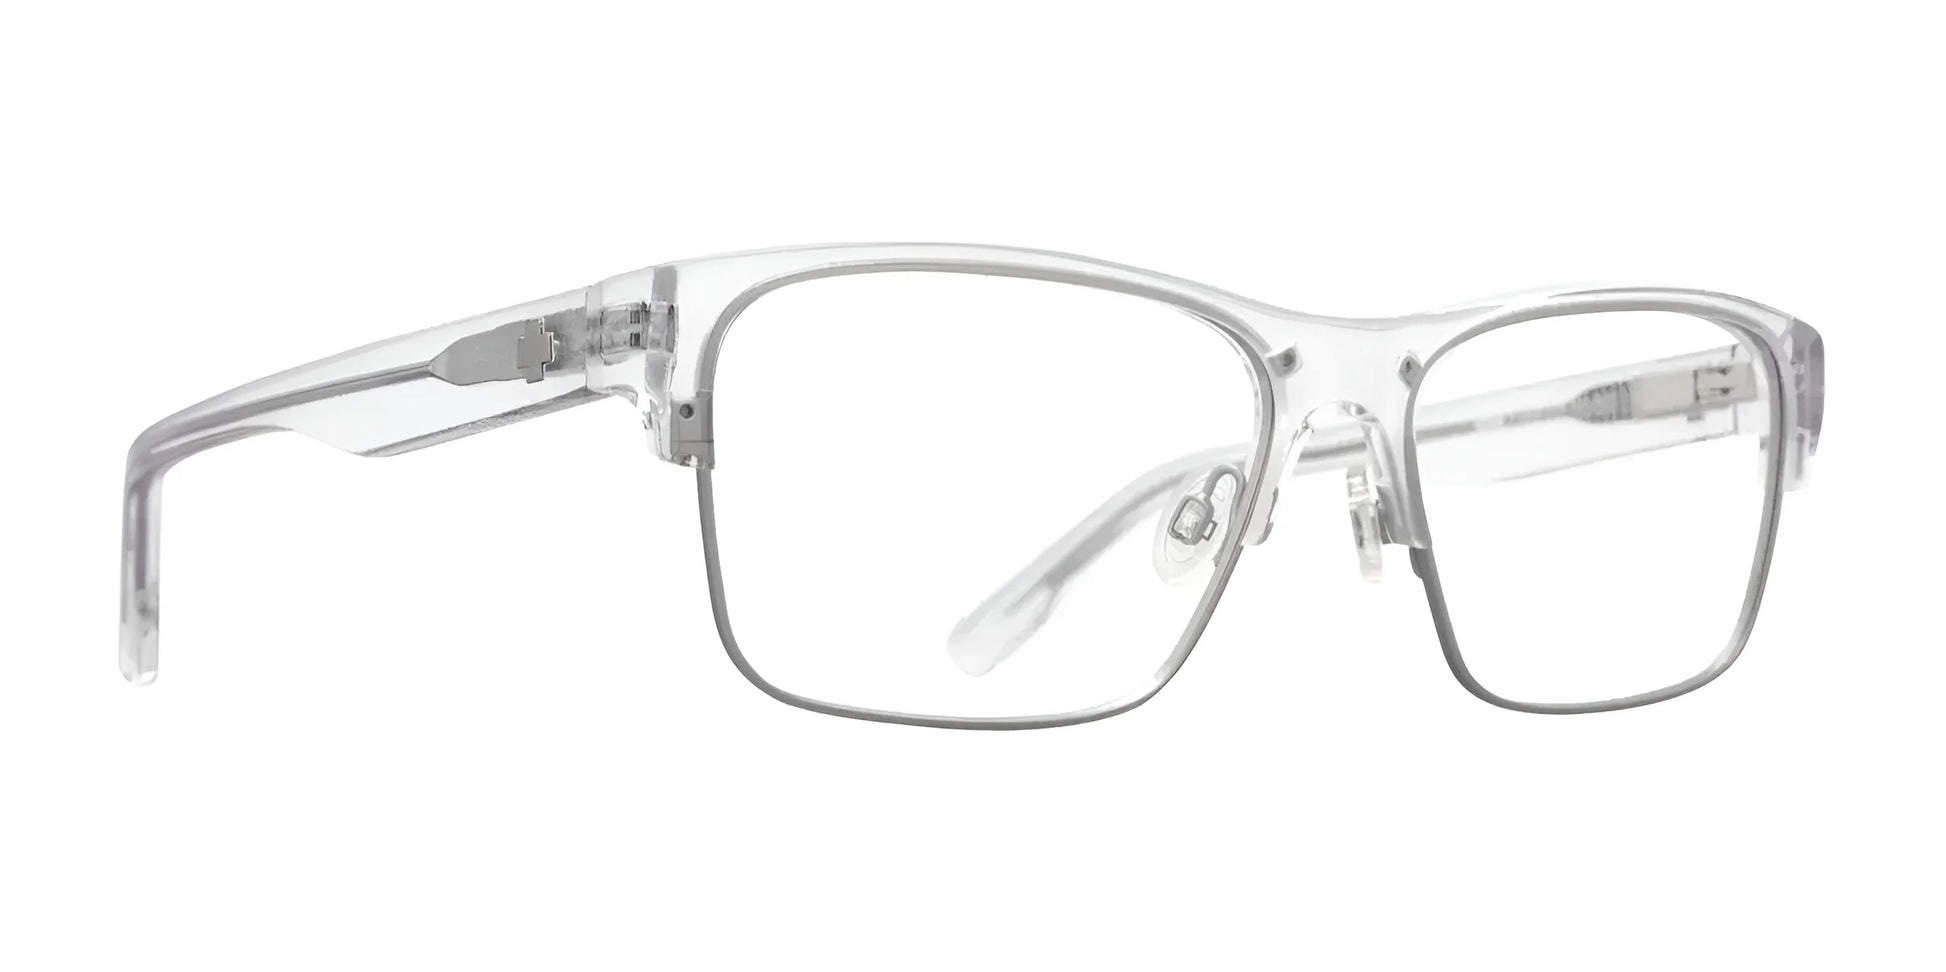 SPY BRODY 50/50 Eyeglasses Crystal Matte Silver